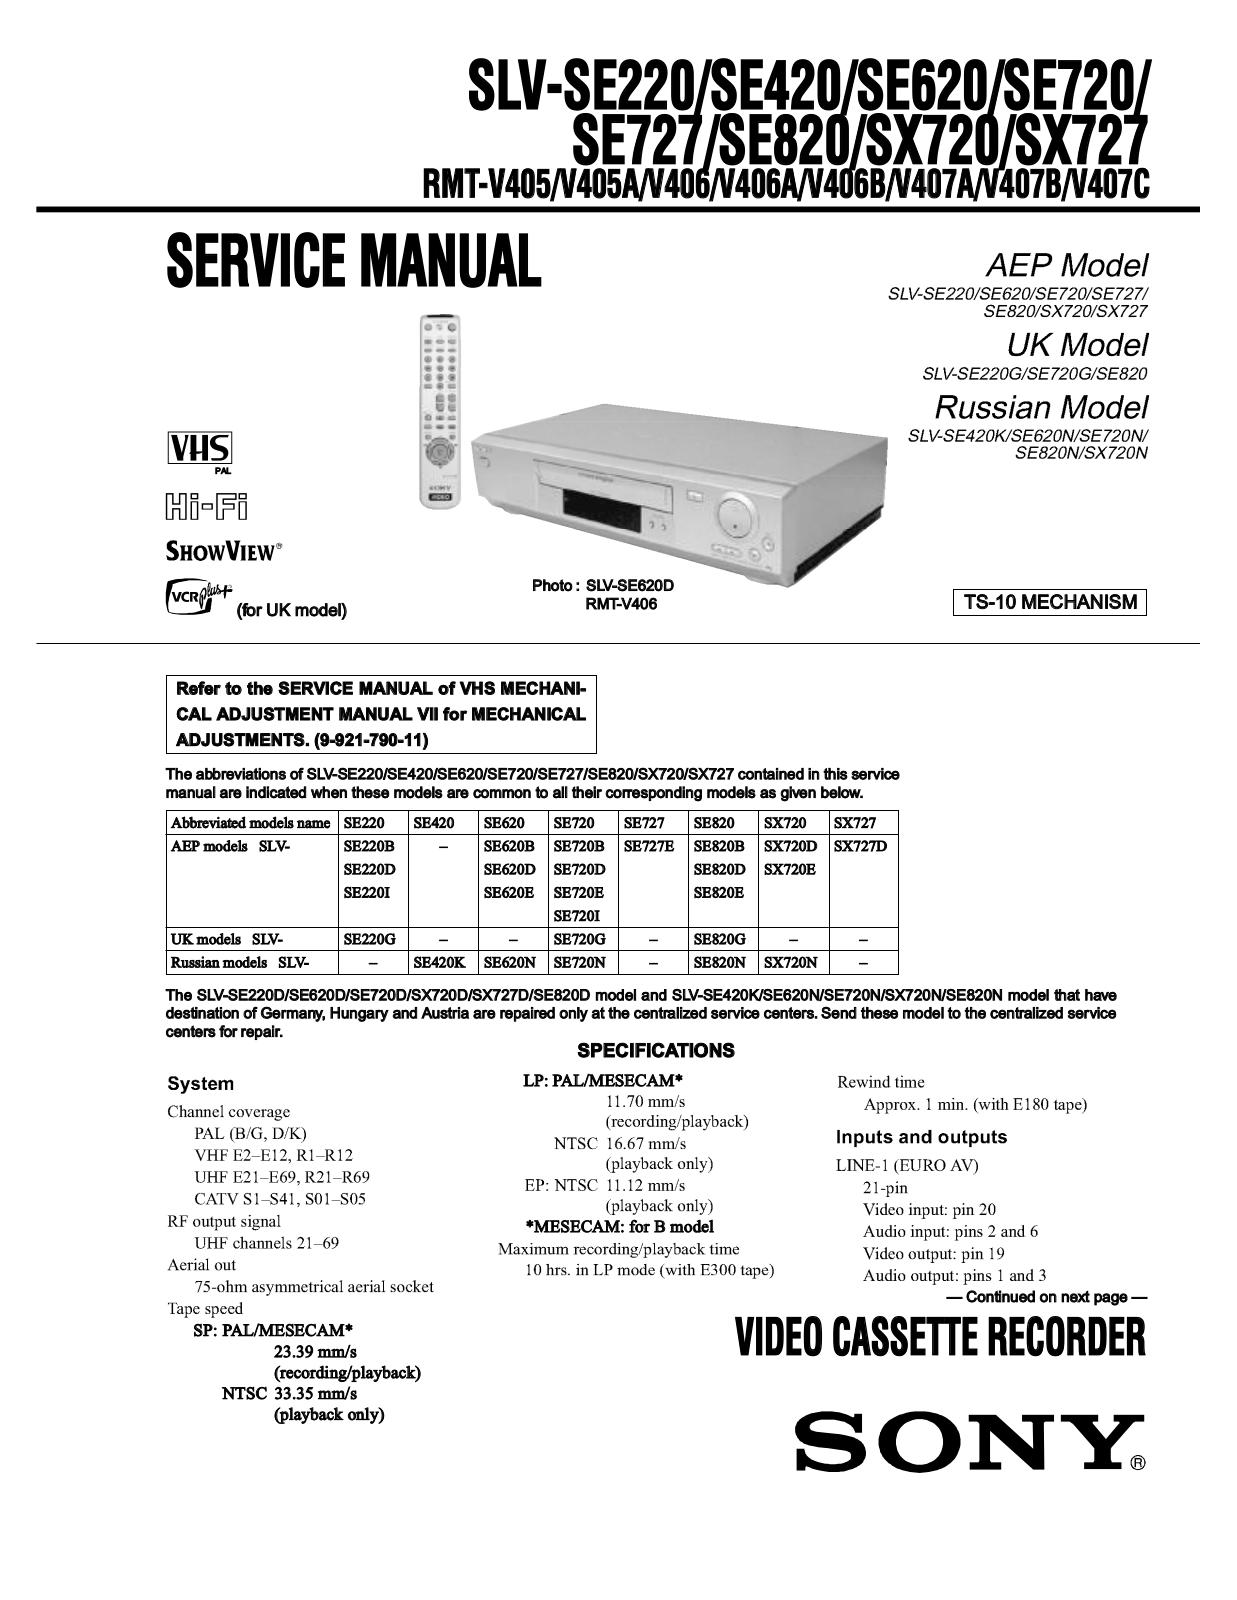 Sony SLV-SE727, SLV-SE820, SLV-SX720, SLV-SX727, SLV-SE620 Service Manual